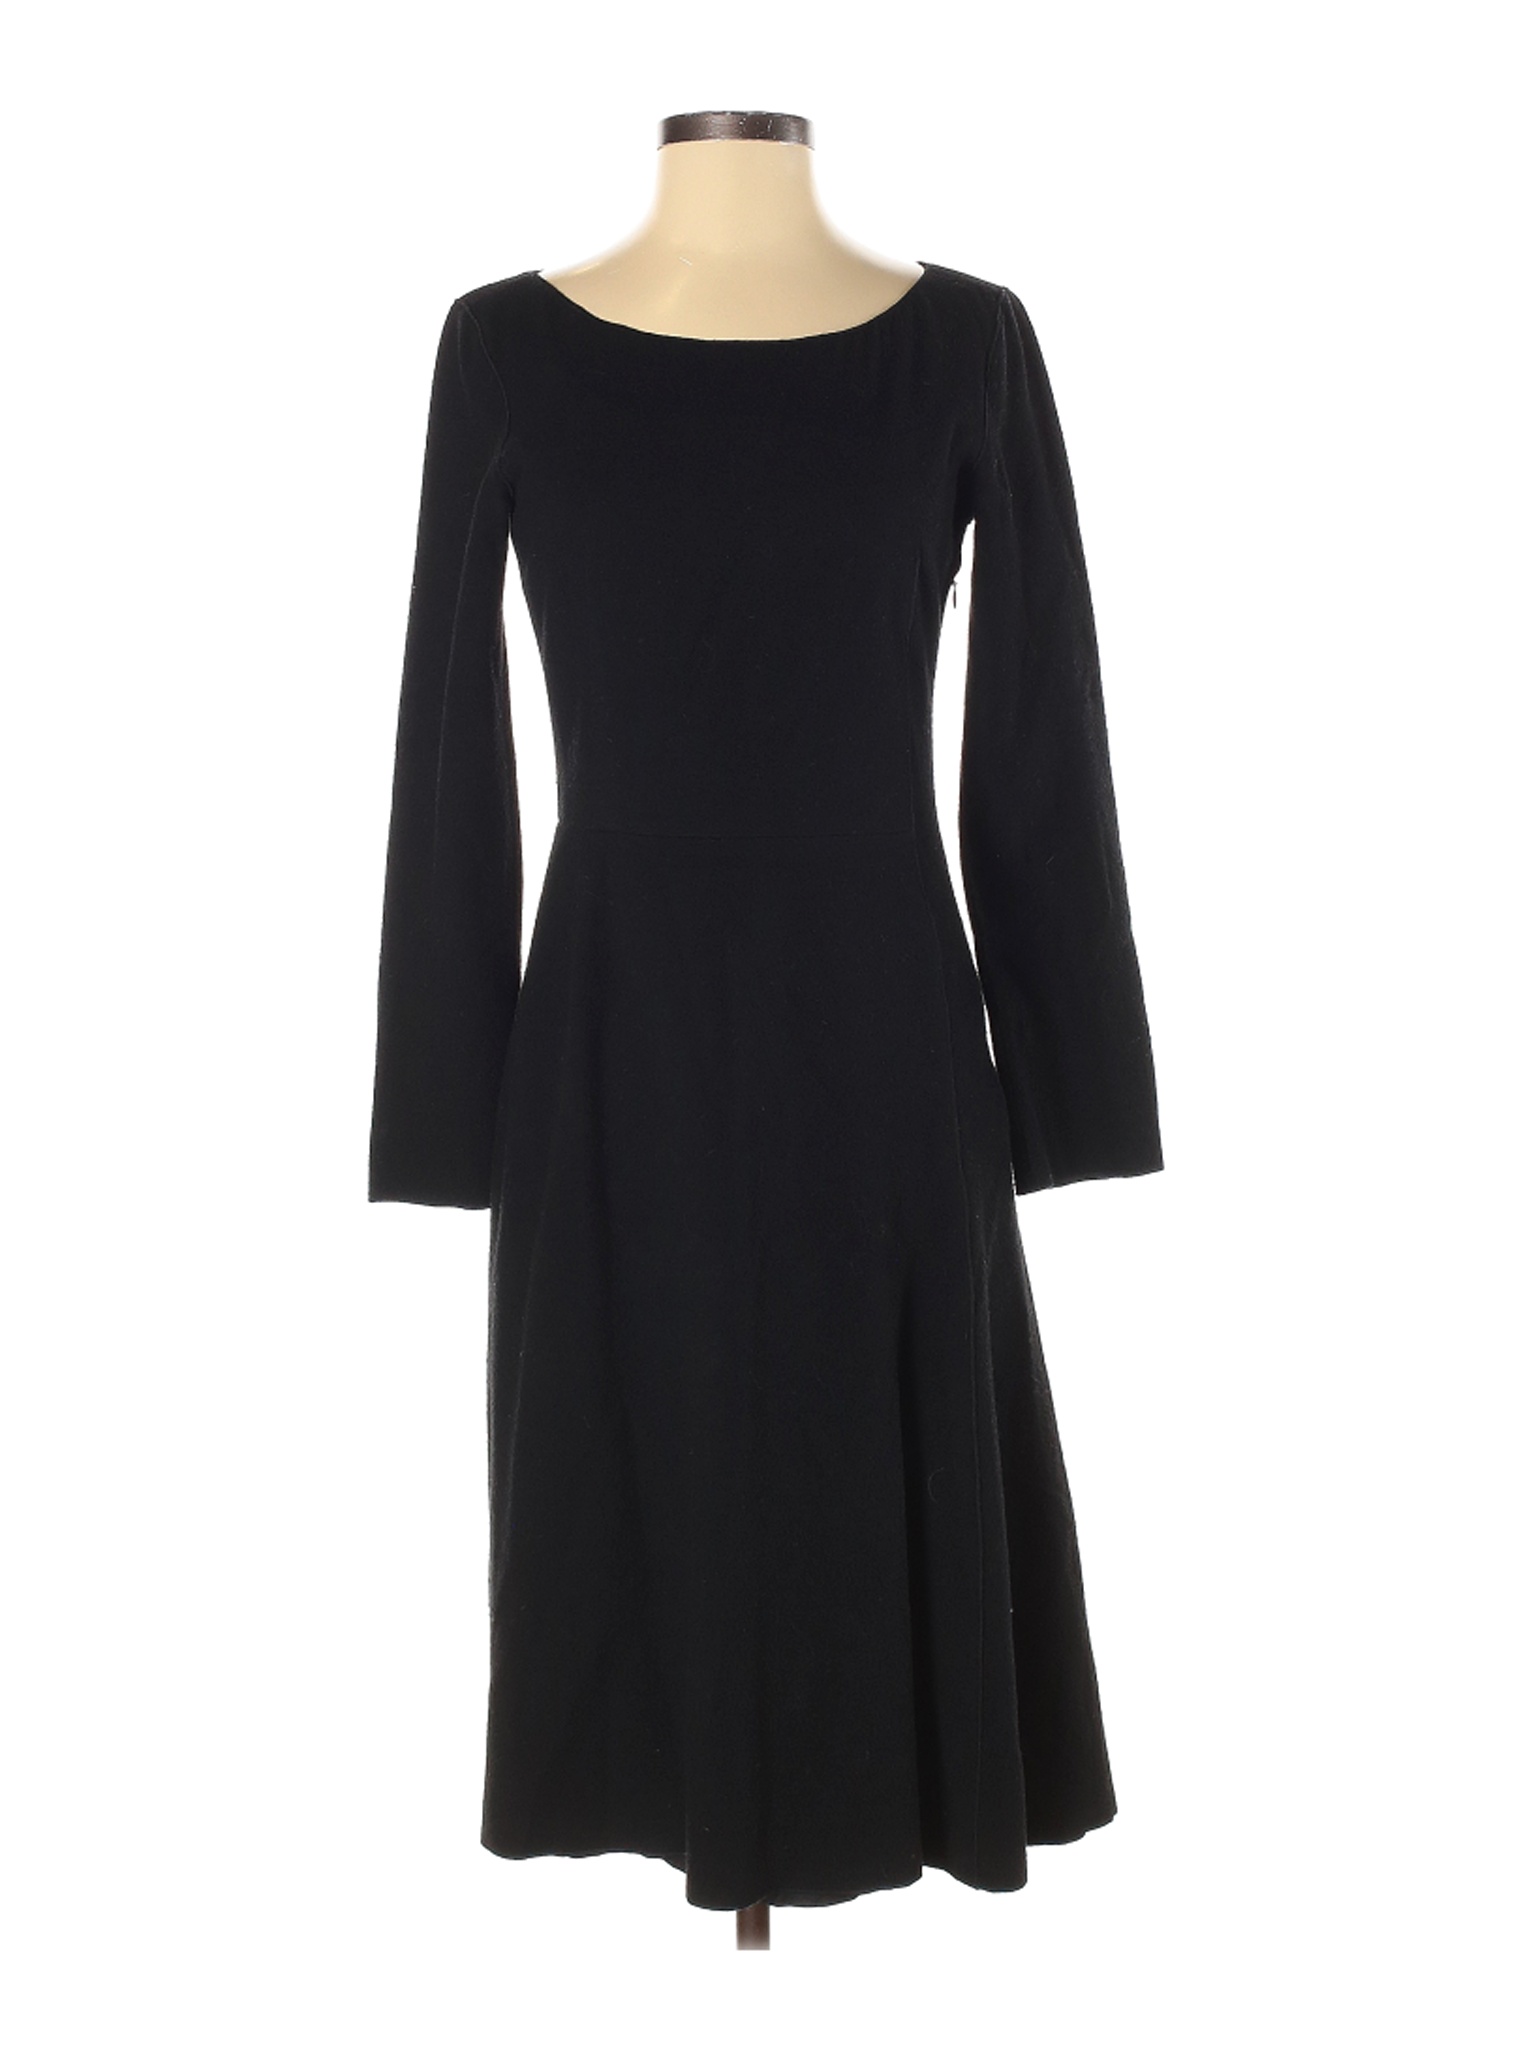 Jil Sander Women Black Casual Dress 34 french | eBay